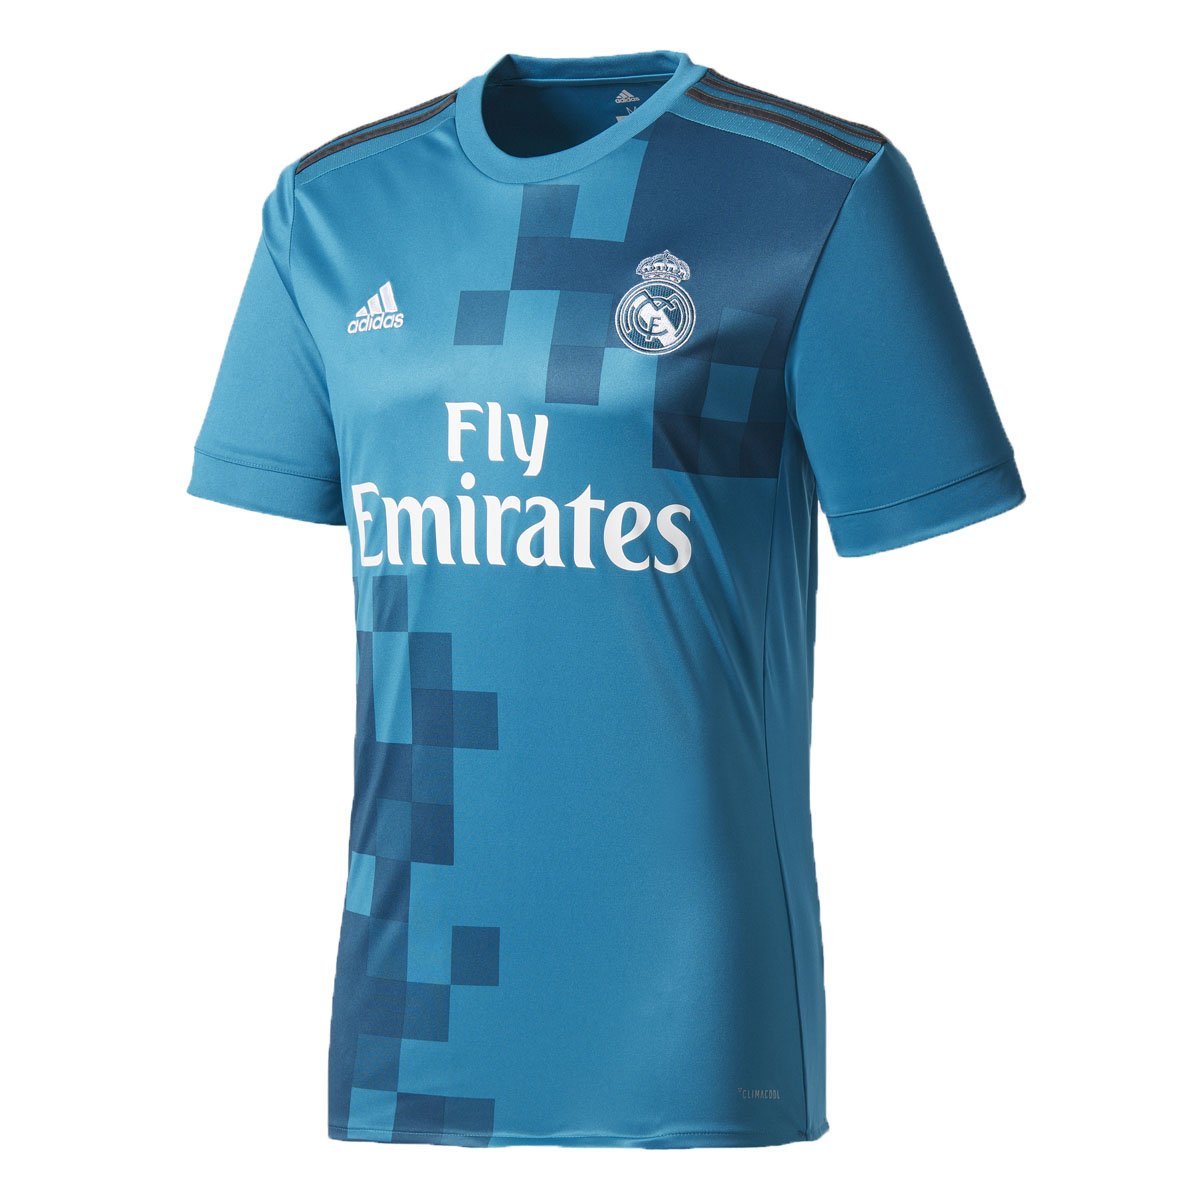 Jersey Real Madrid Tercero / Replica Adidas - Infantil